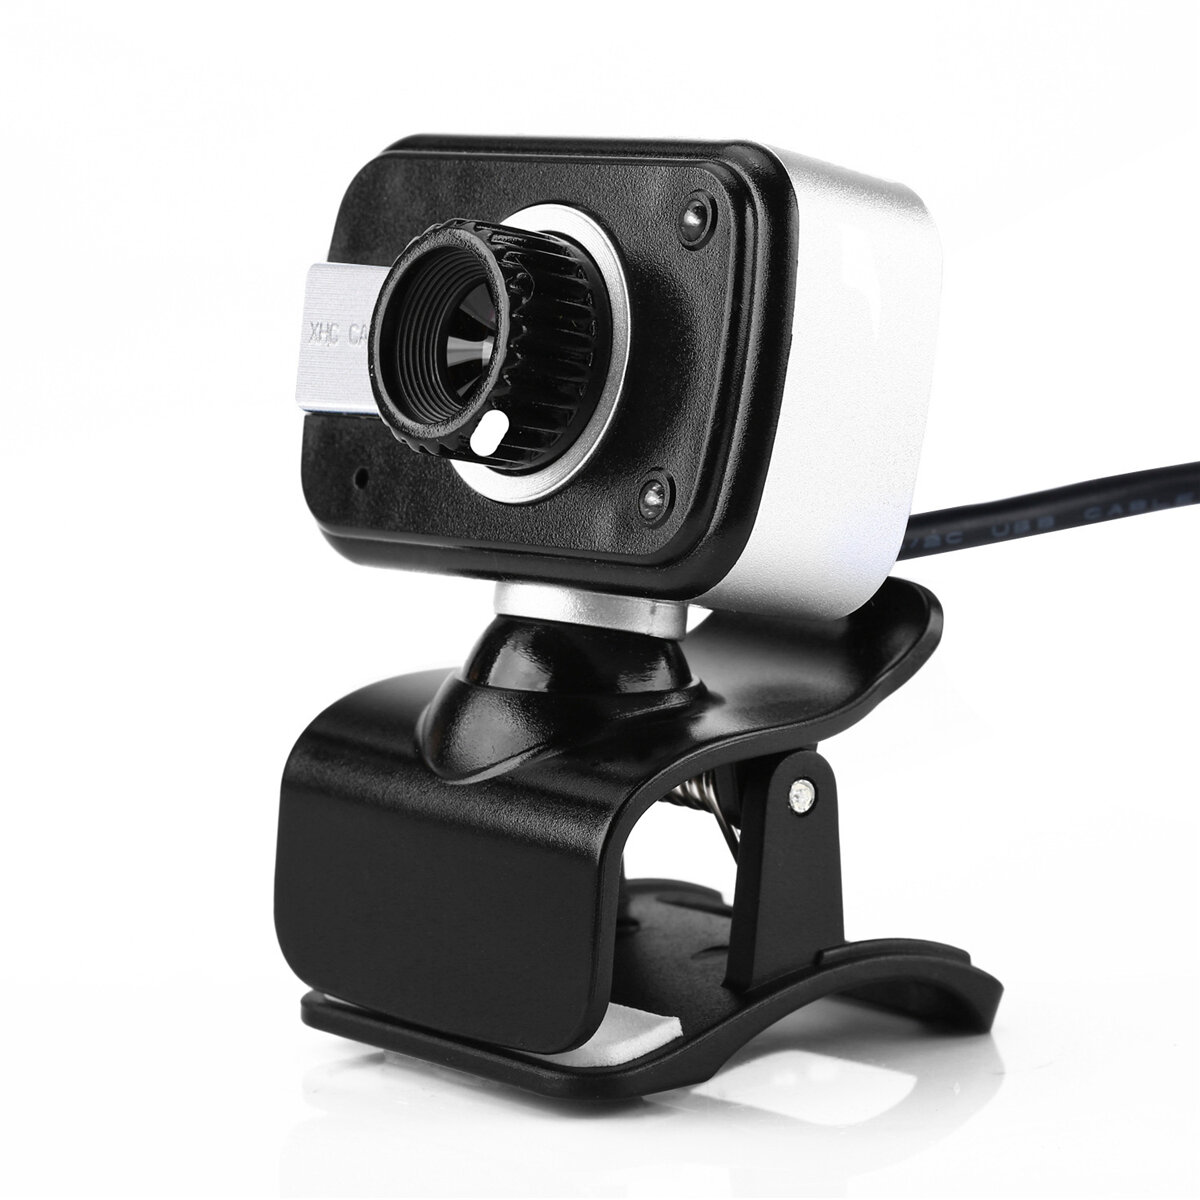 USB 2.0 HD 1080P Webcam webcamera Computer HD Ingebouwde microfoon USB Plug and Play